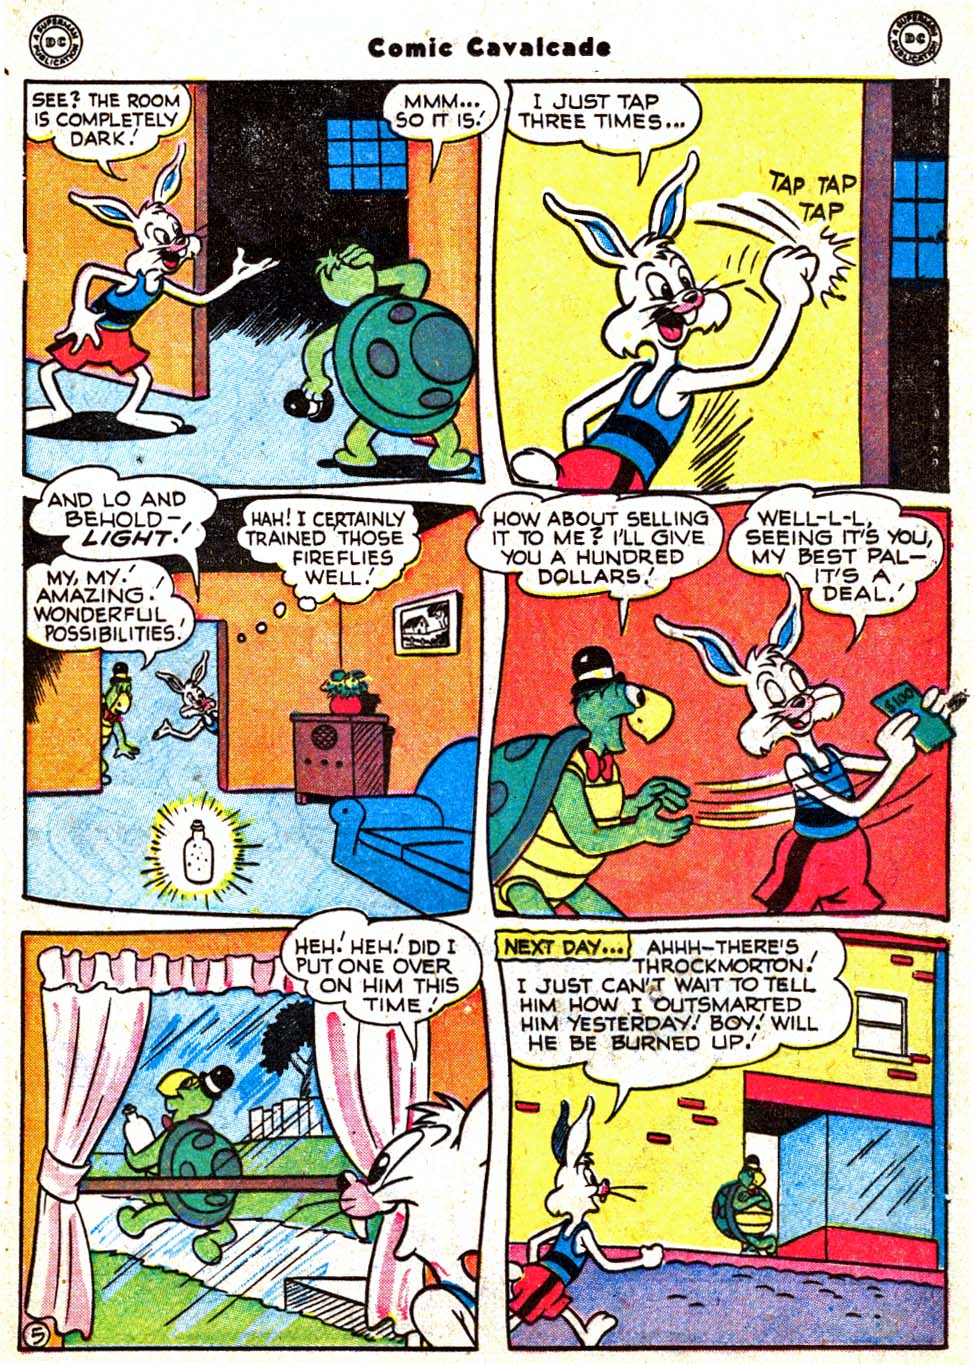 Comic Cavalcade issue 31 - Page 29